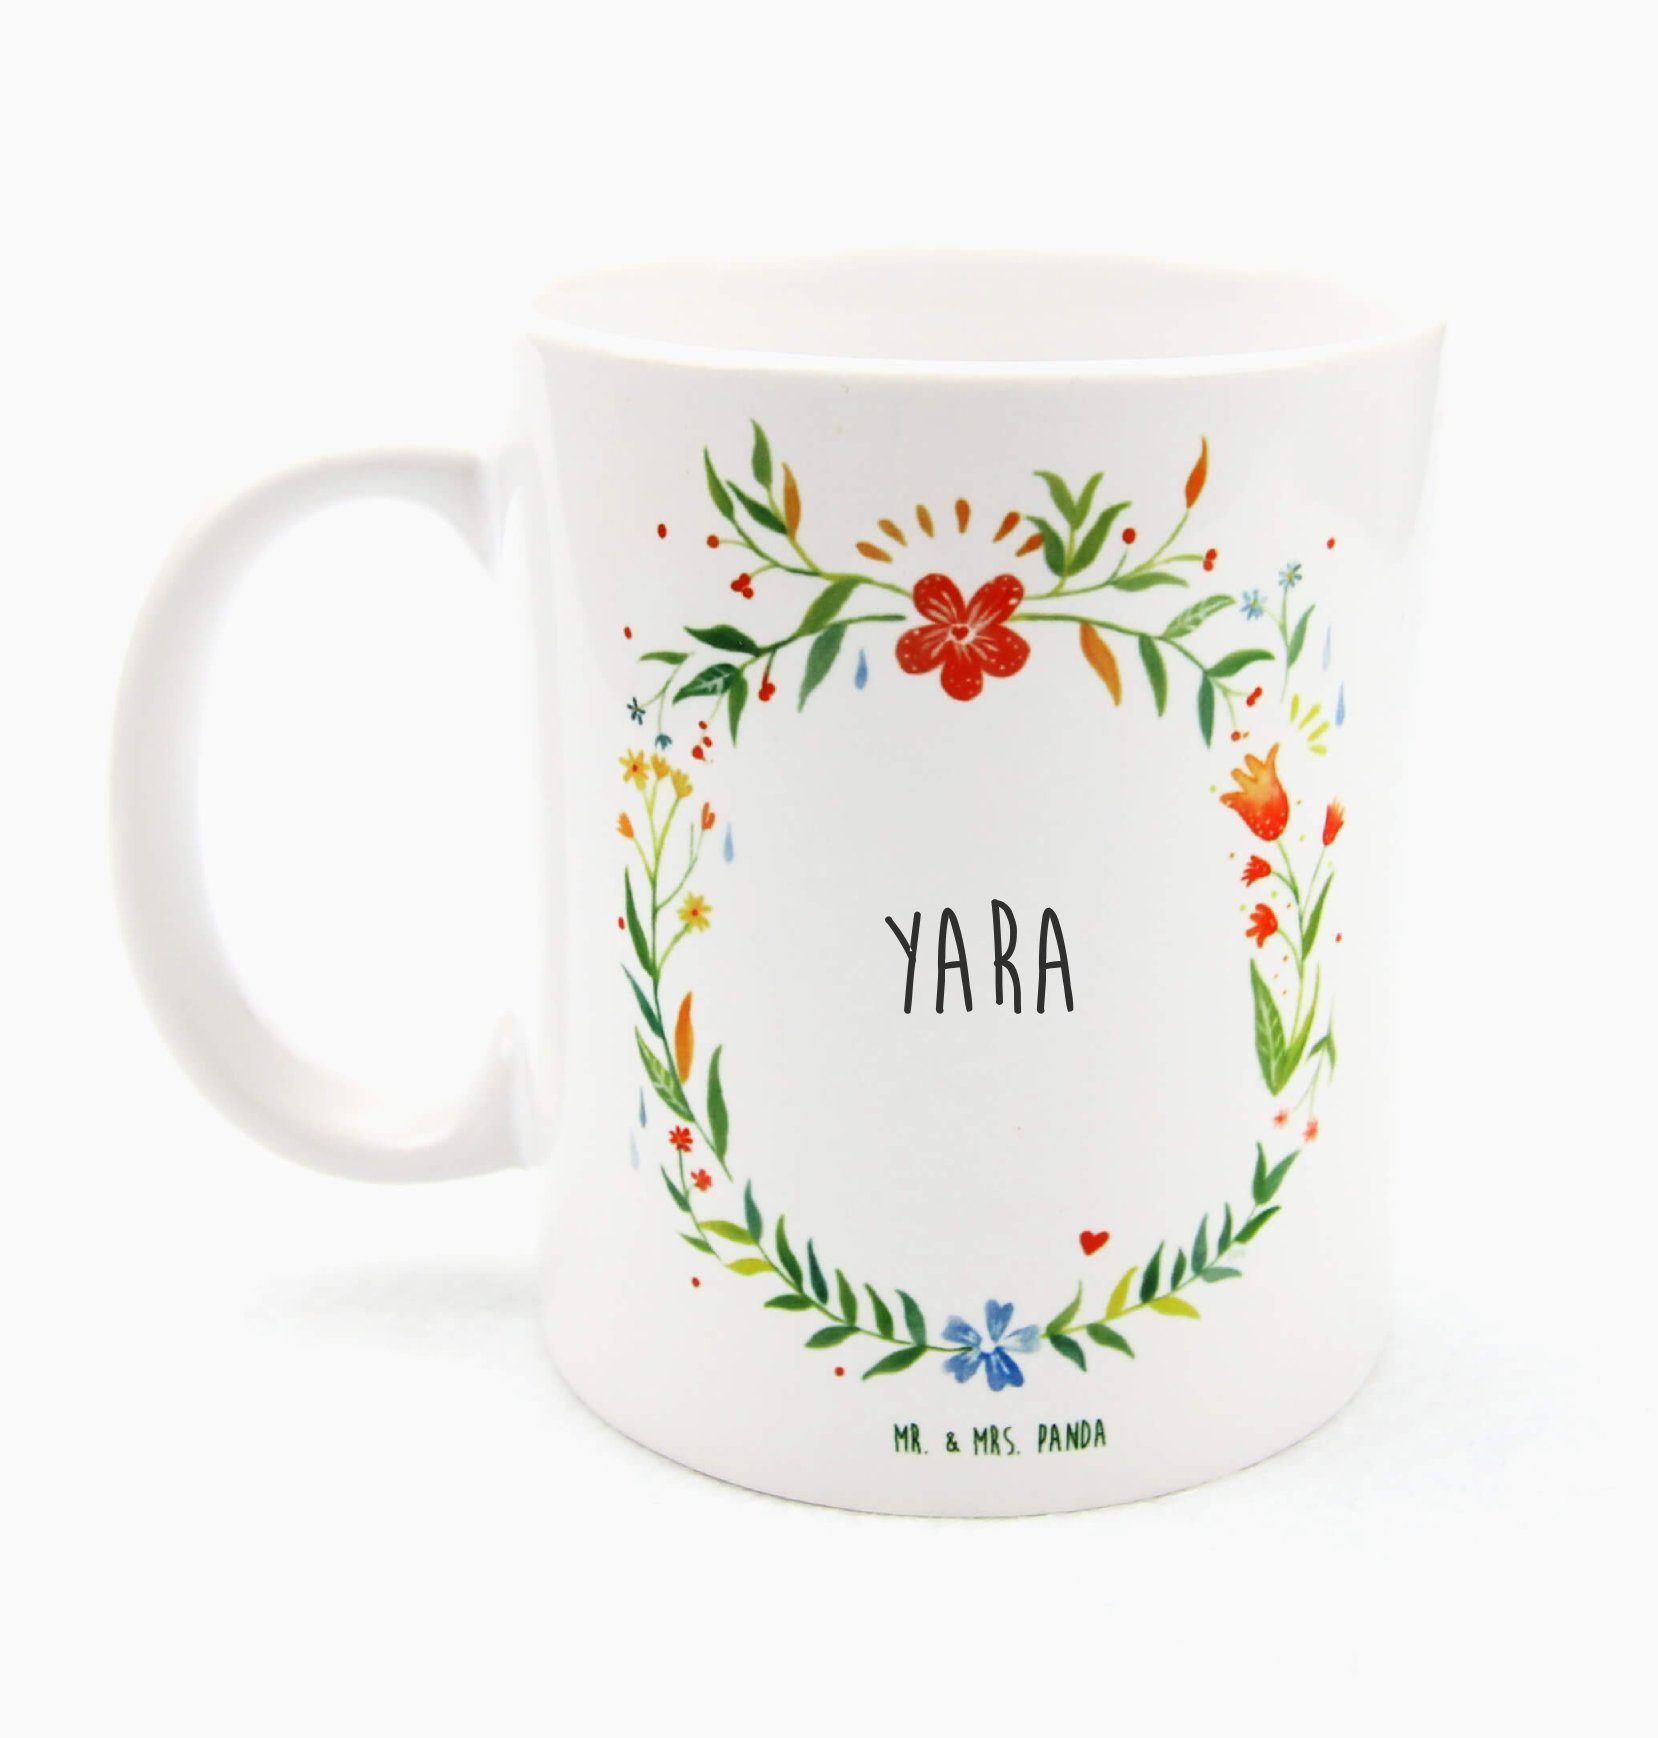 Geschenk Motive, Panda Tasse, - & Yara Porzellantasse, Tasse Keramik Geschenk, Kaffee, Mr. Tasse Mrs.